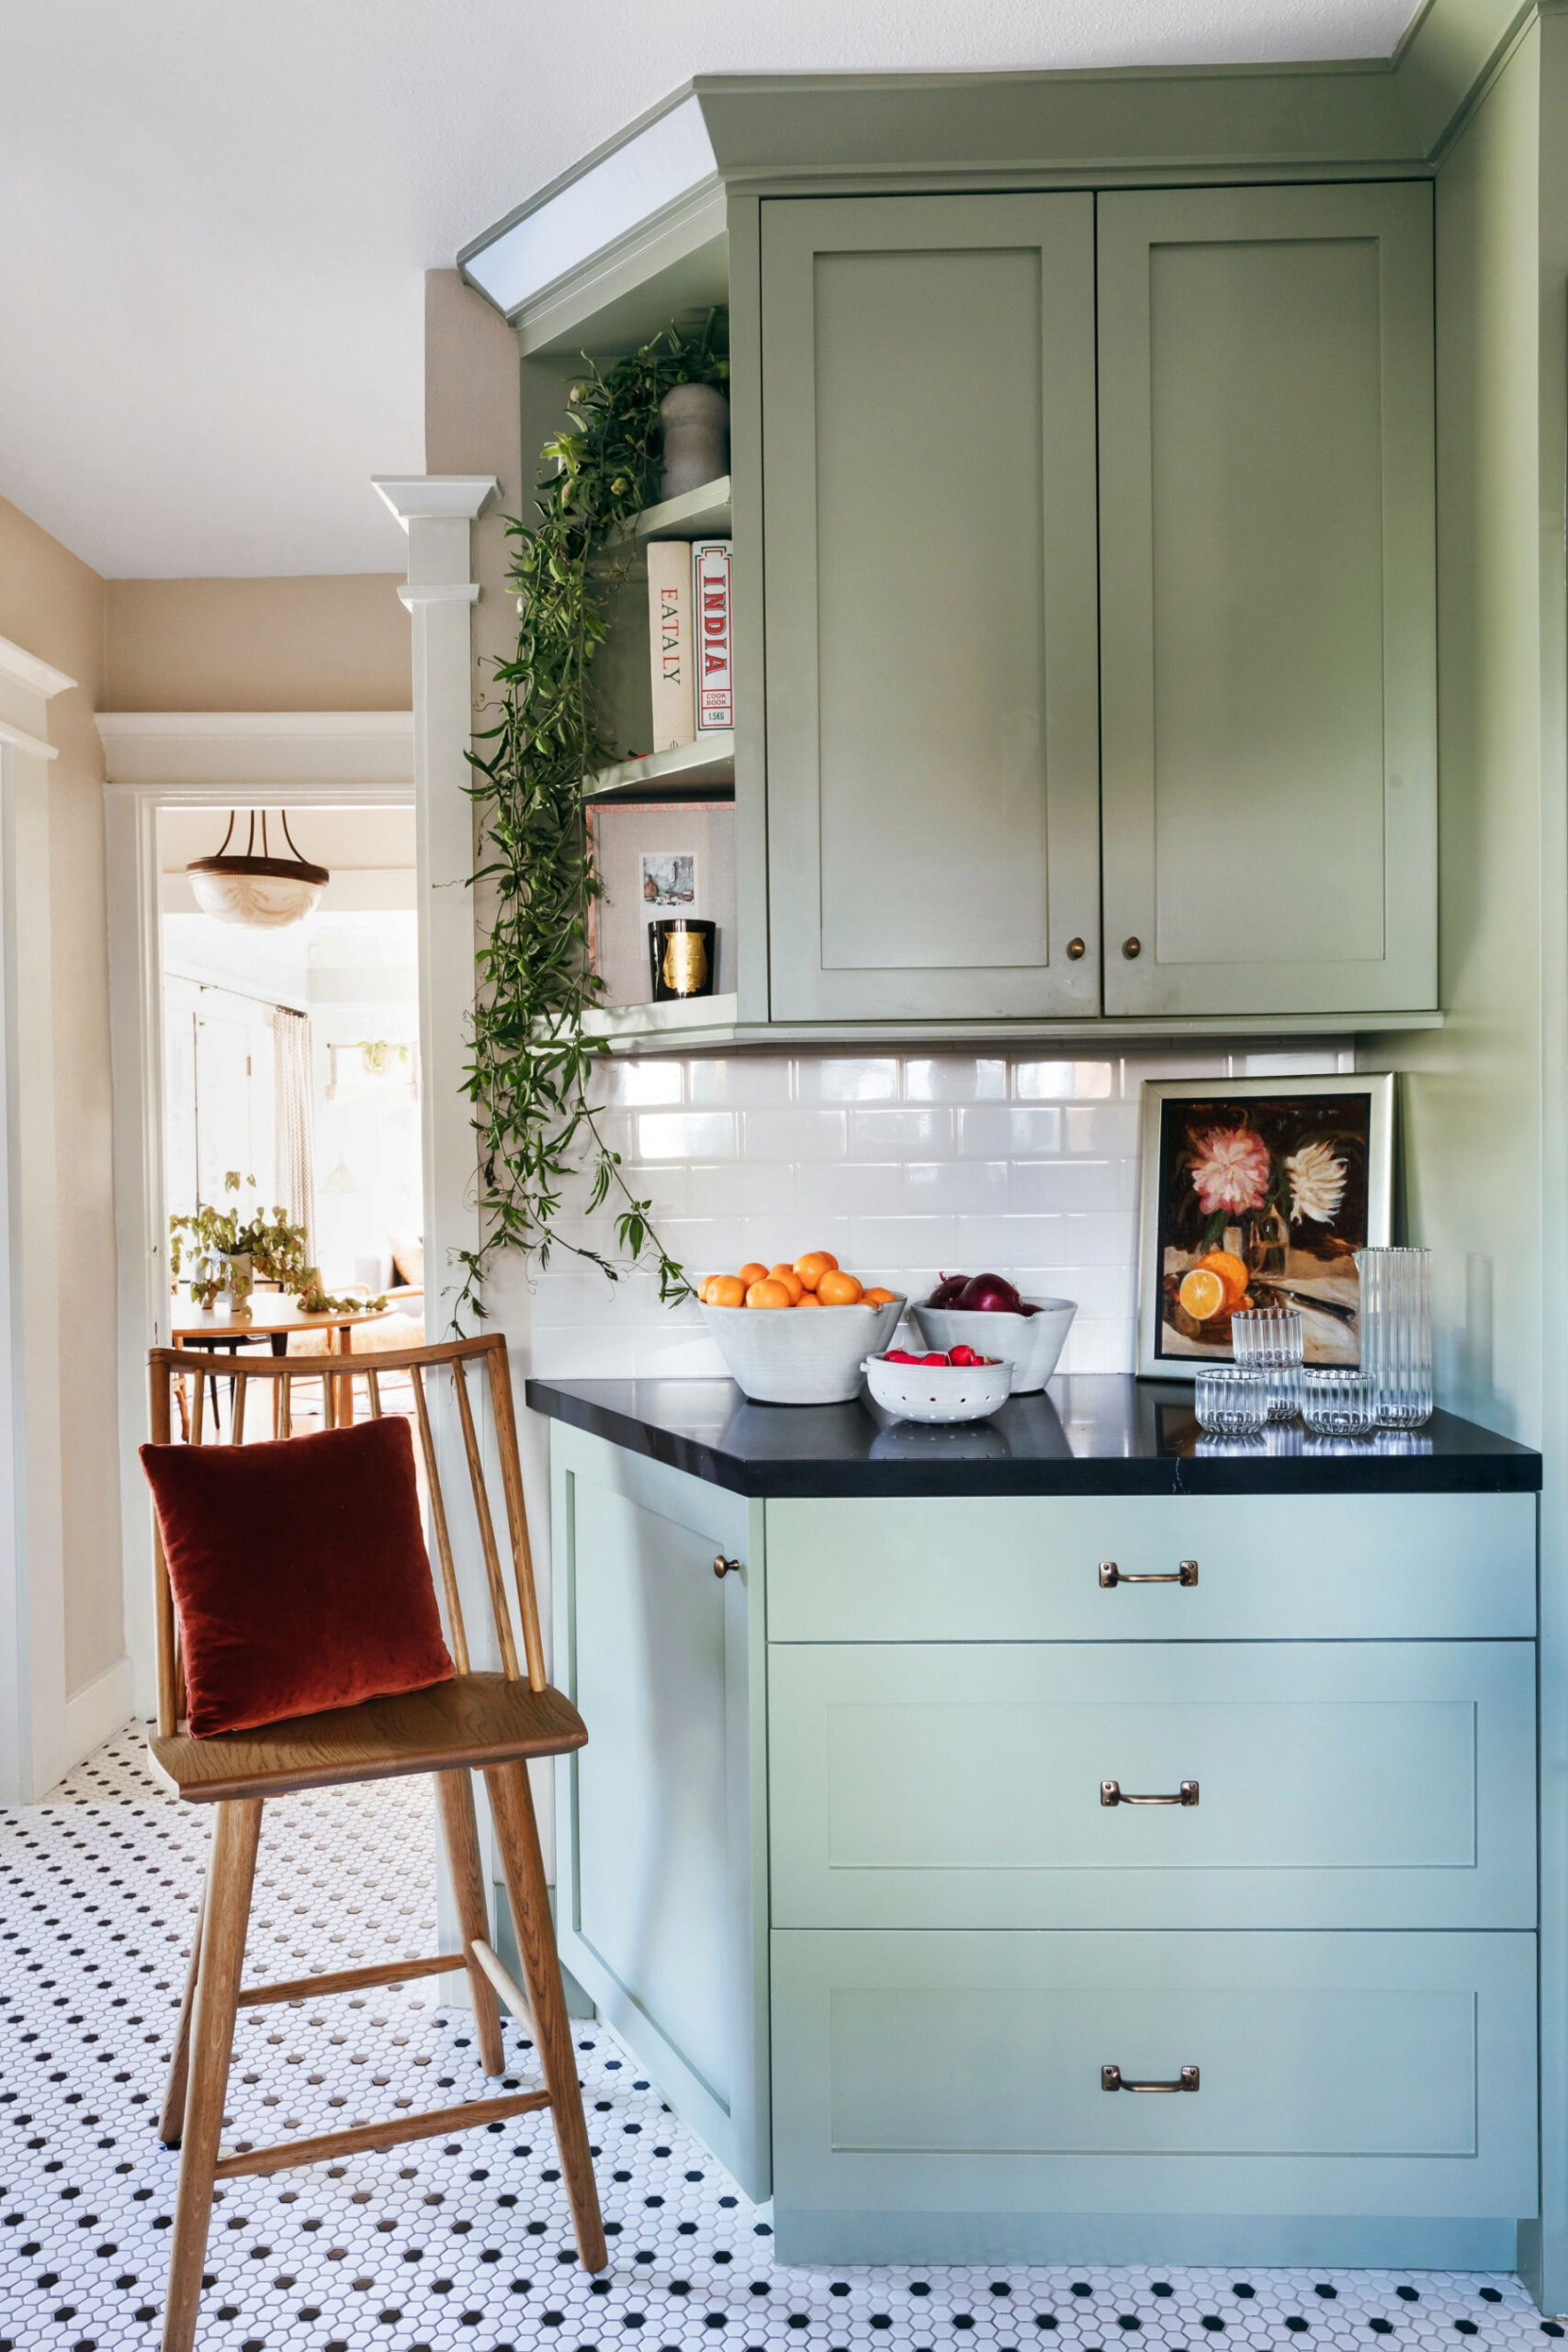 Best Small Kitchen Design Ideas - Small Kitchen Layout Photos